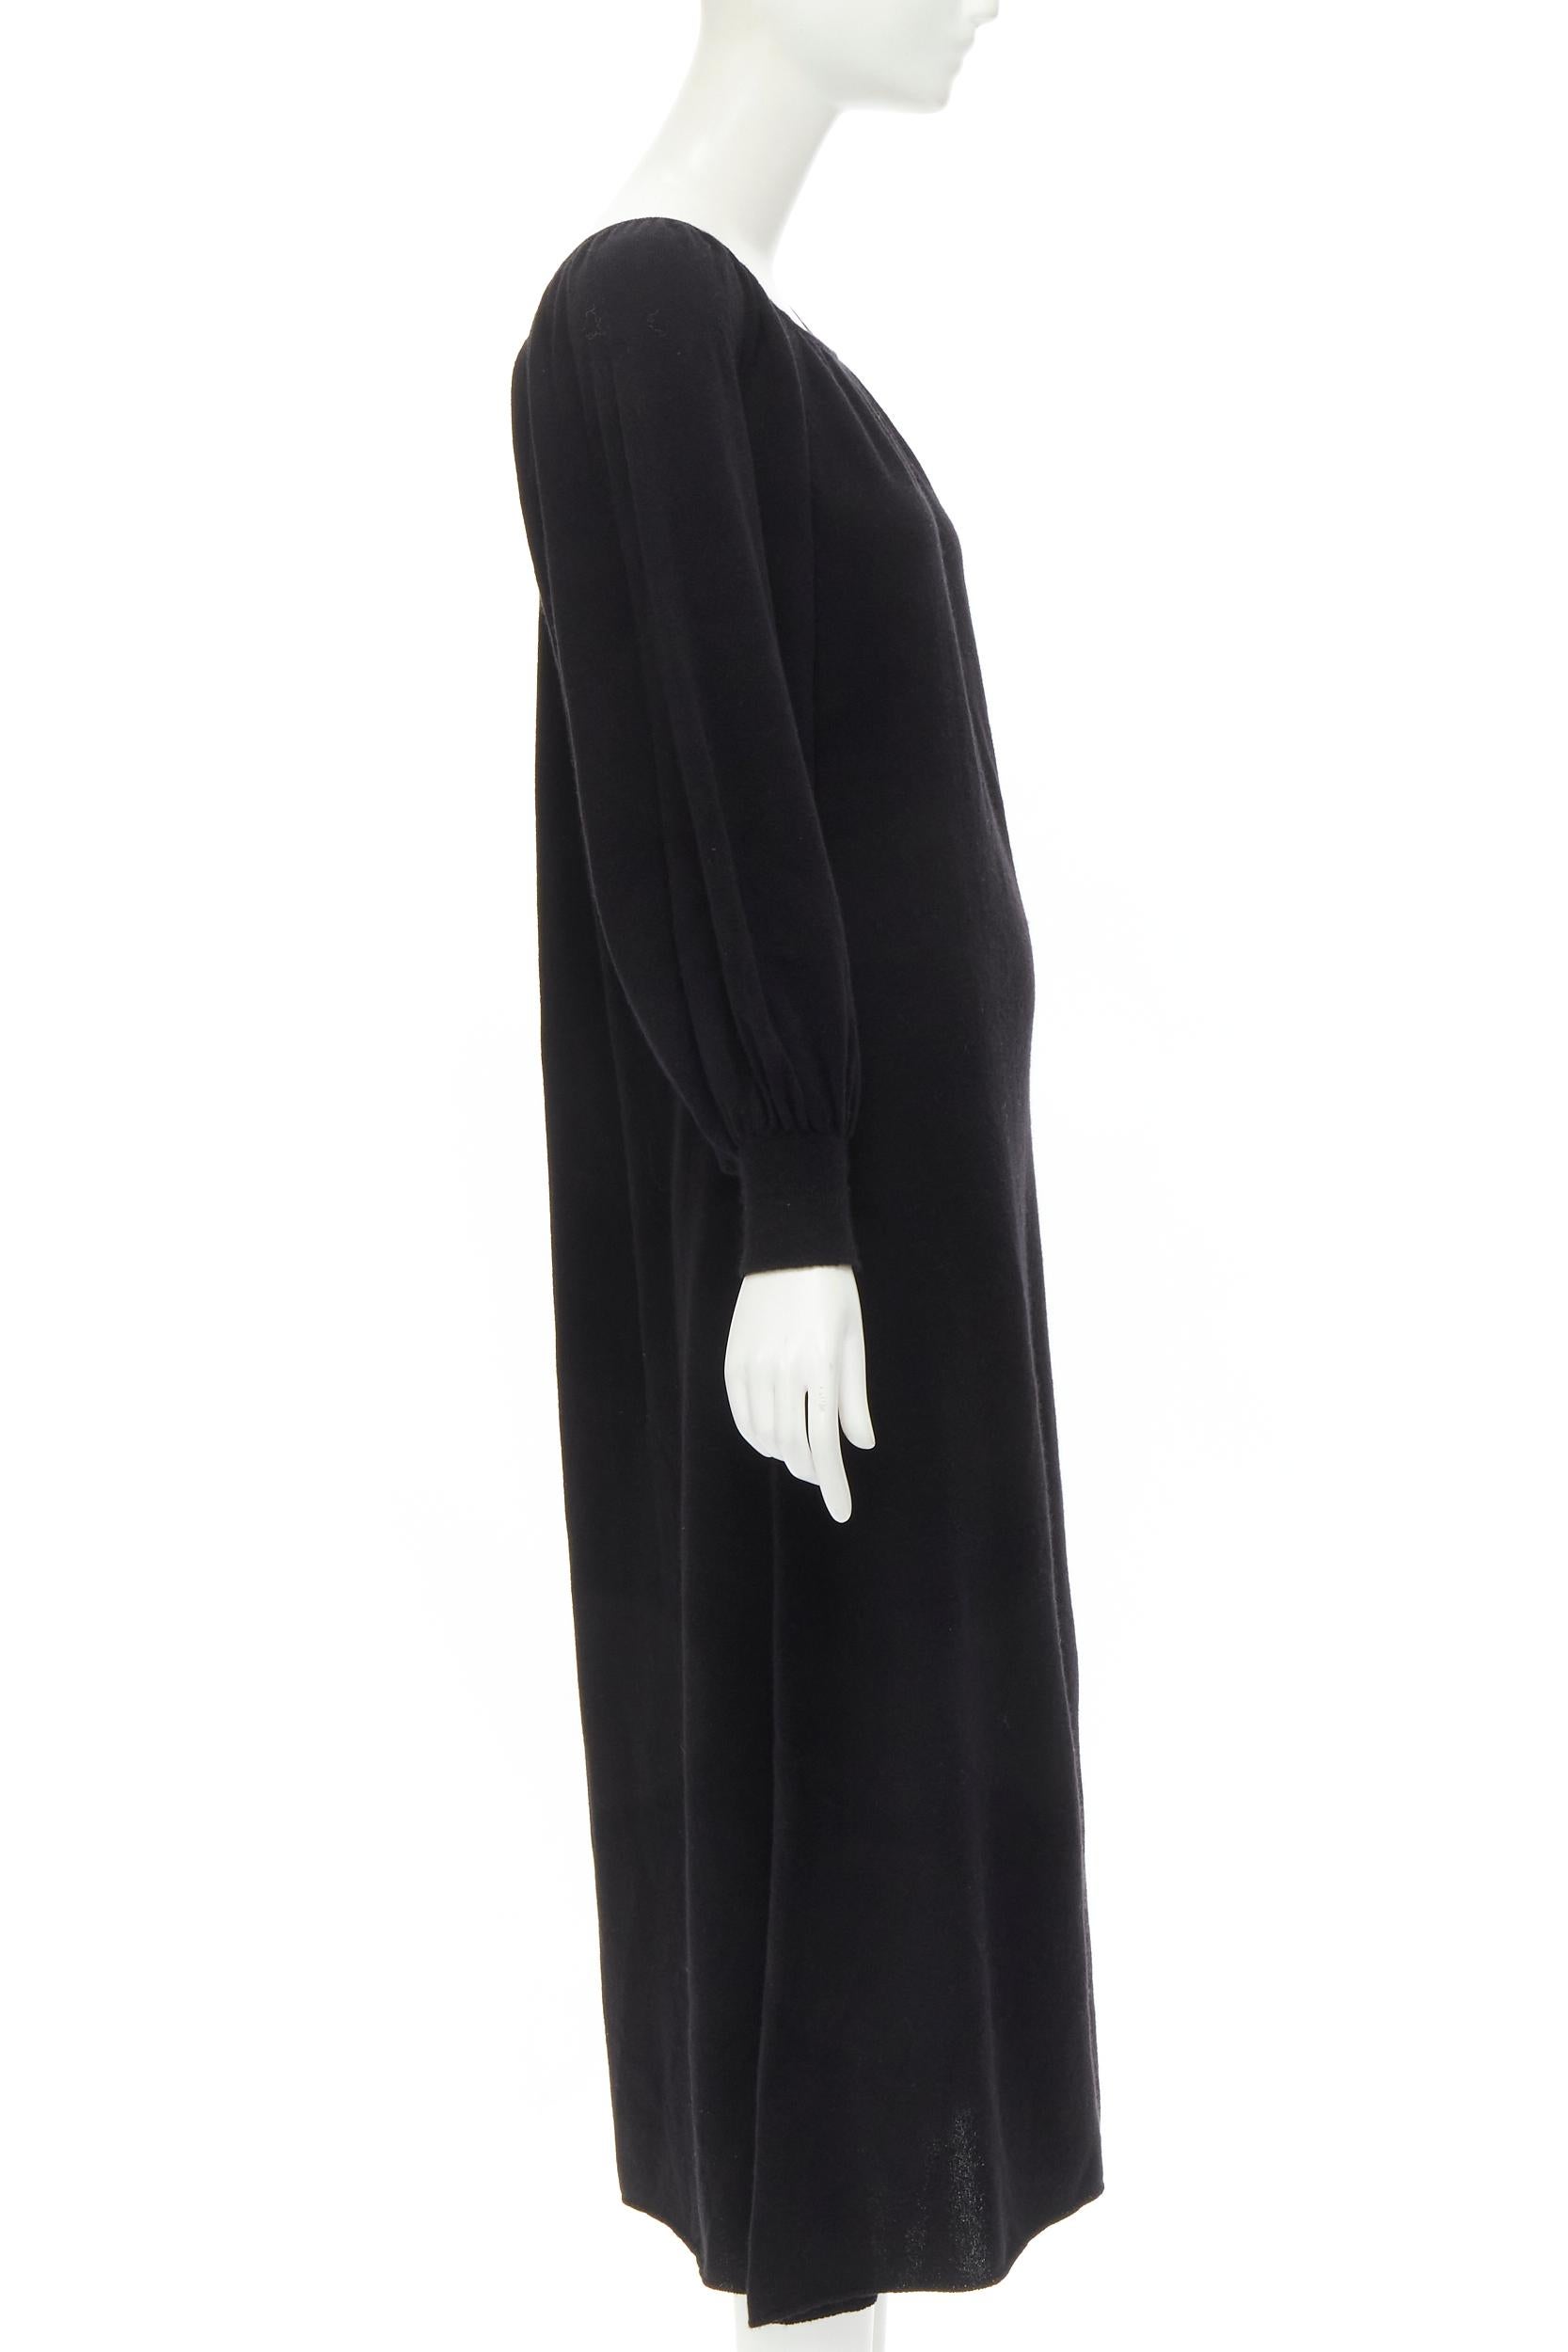 Black RYAN ROCHE 100% cashmere black pleated collar bubble sleeve midi dress S For Sale